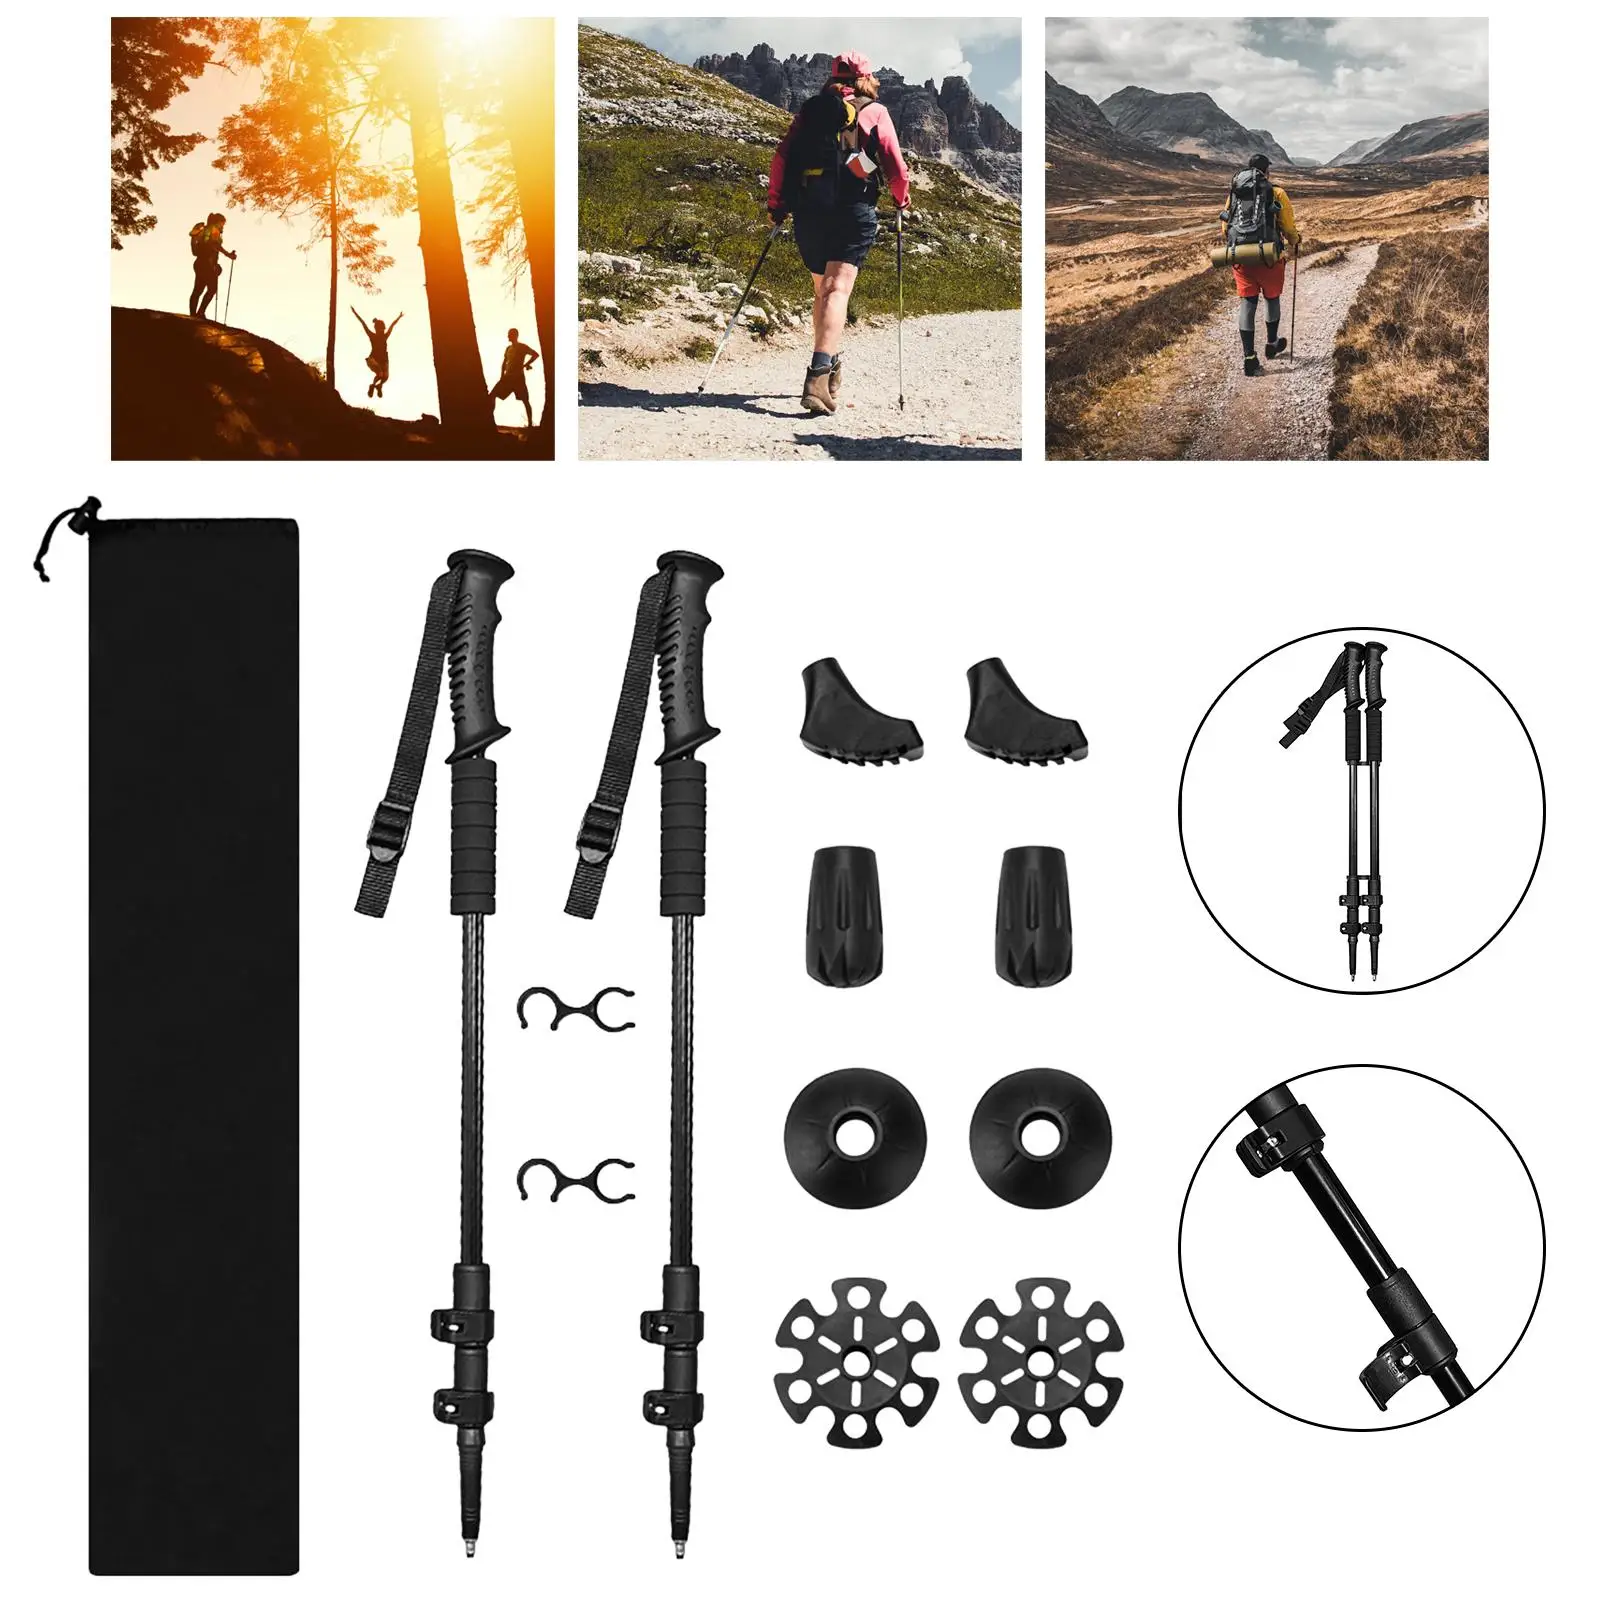 2x Trekking Poles Telescopic 3 Joint Adjustable Lock Non Slip Handle Stick for Backpackers Hikers Walkers Hiking Walking